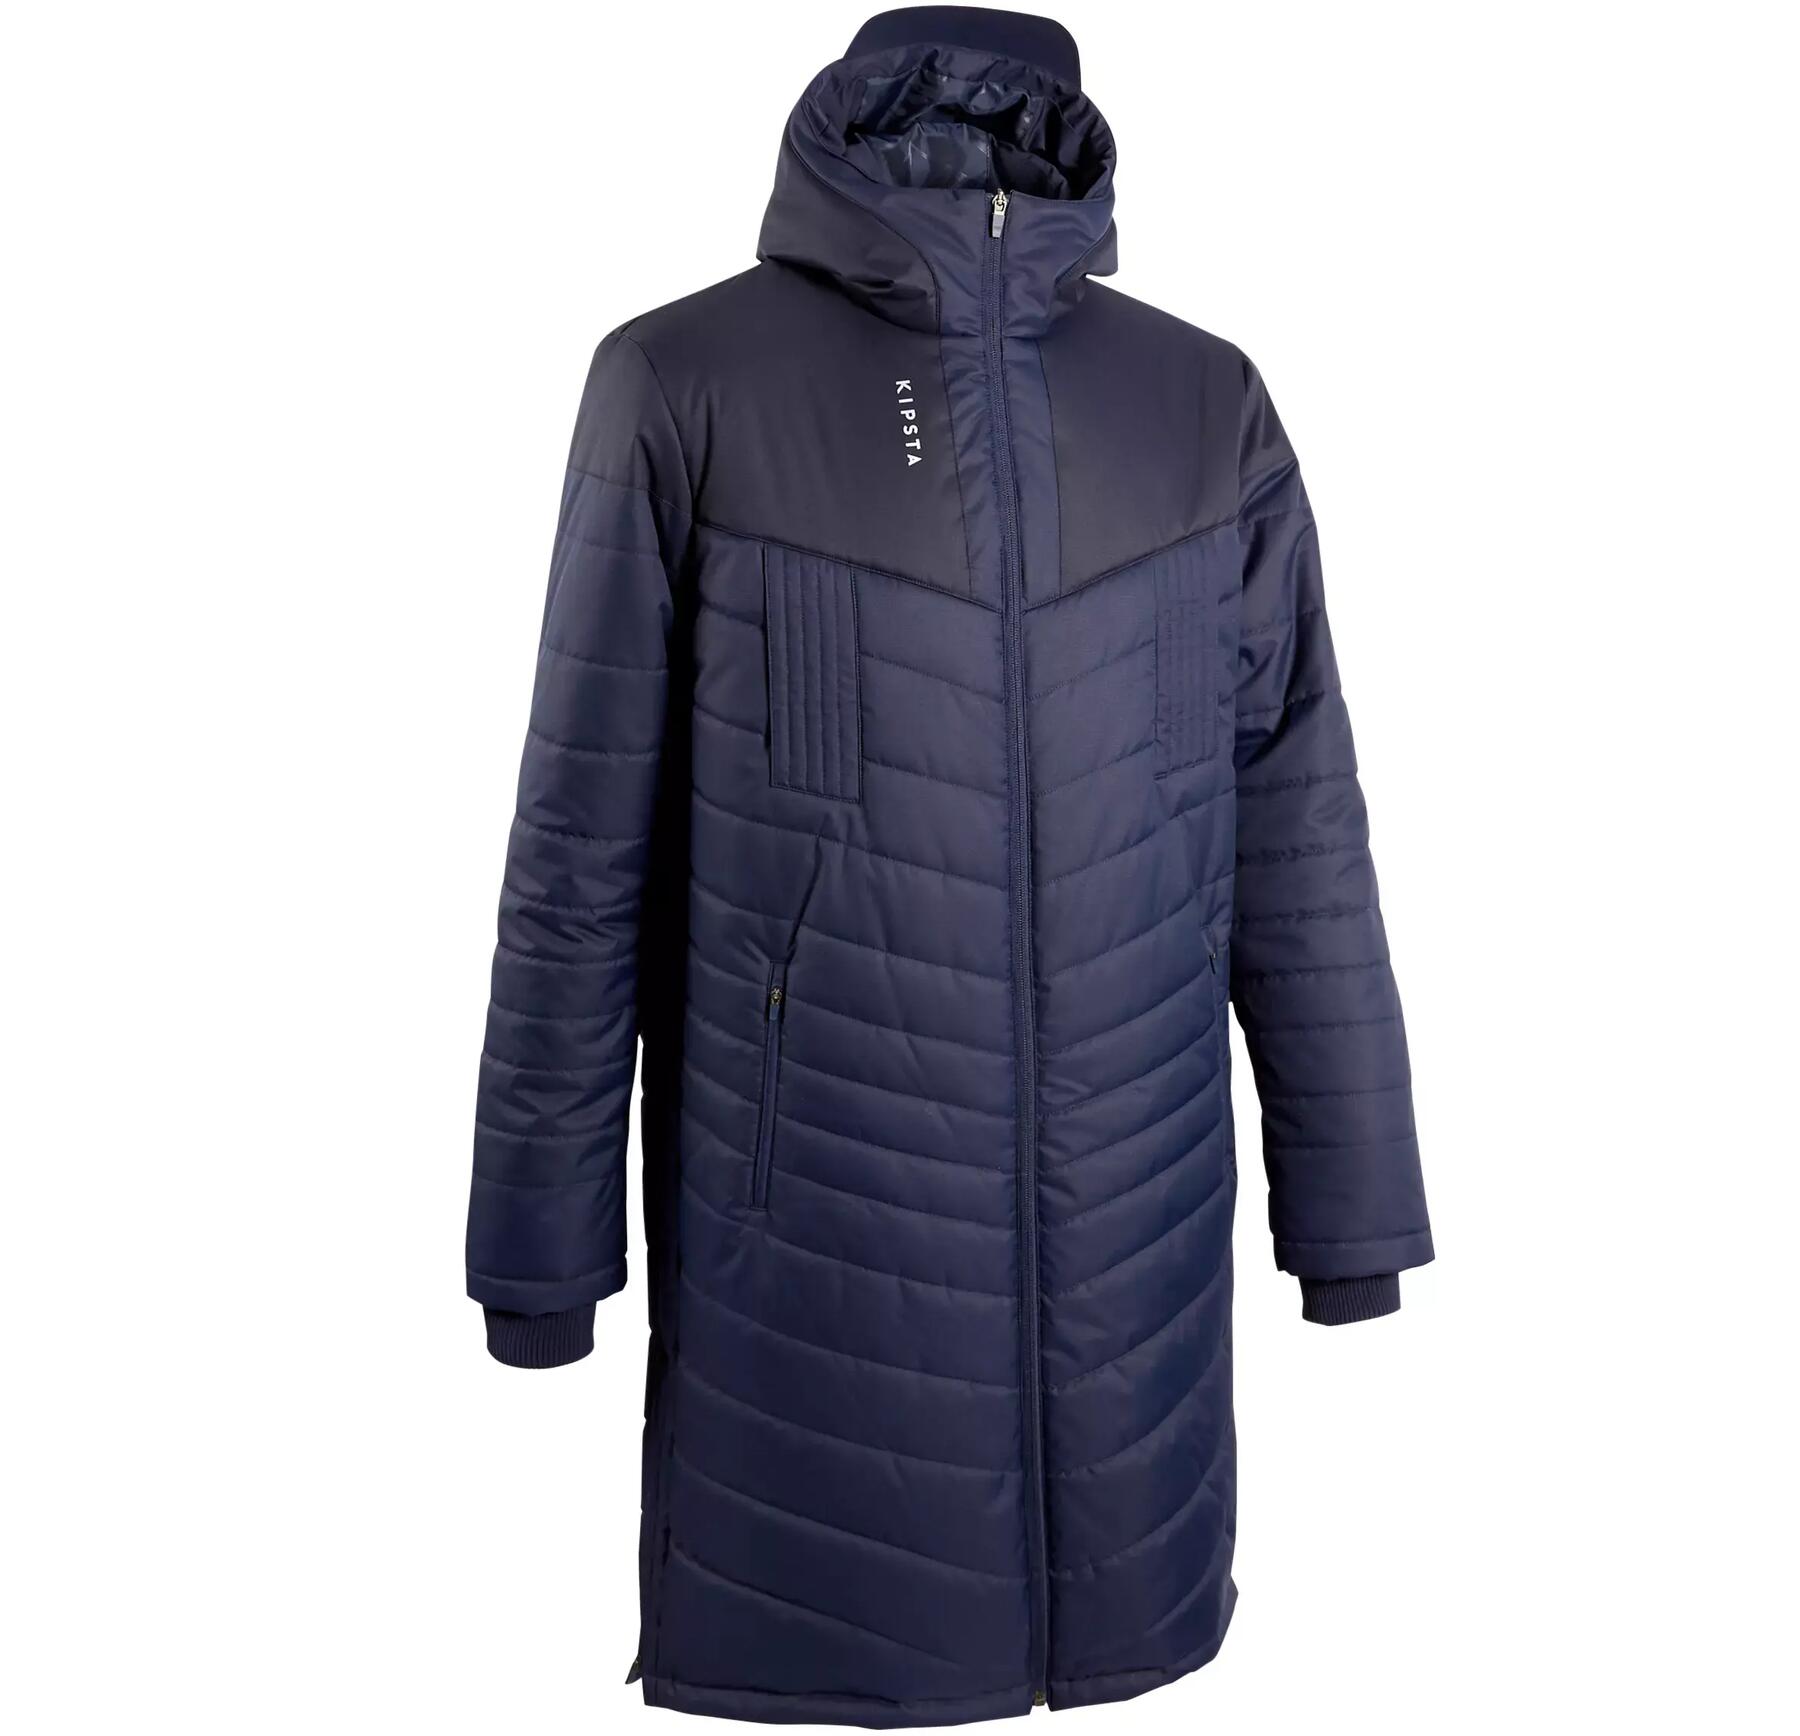 Find the Best Warm Waterproof Jackets this Winter